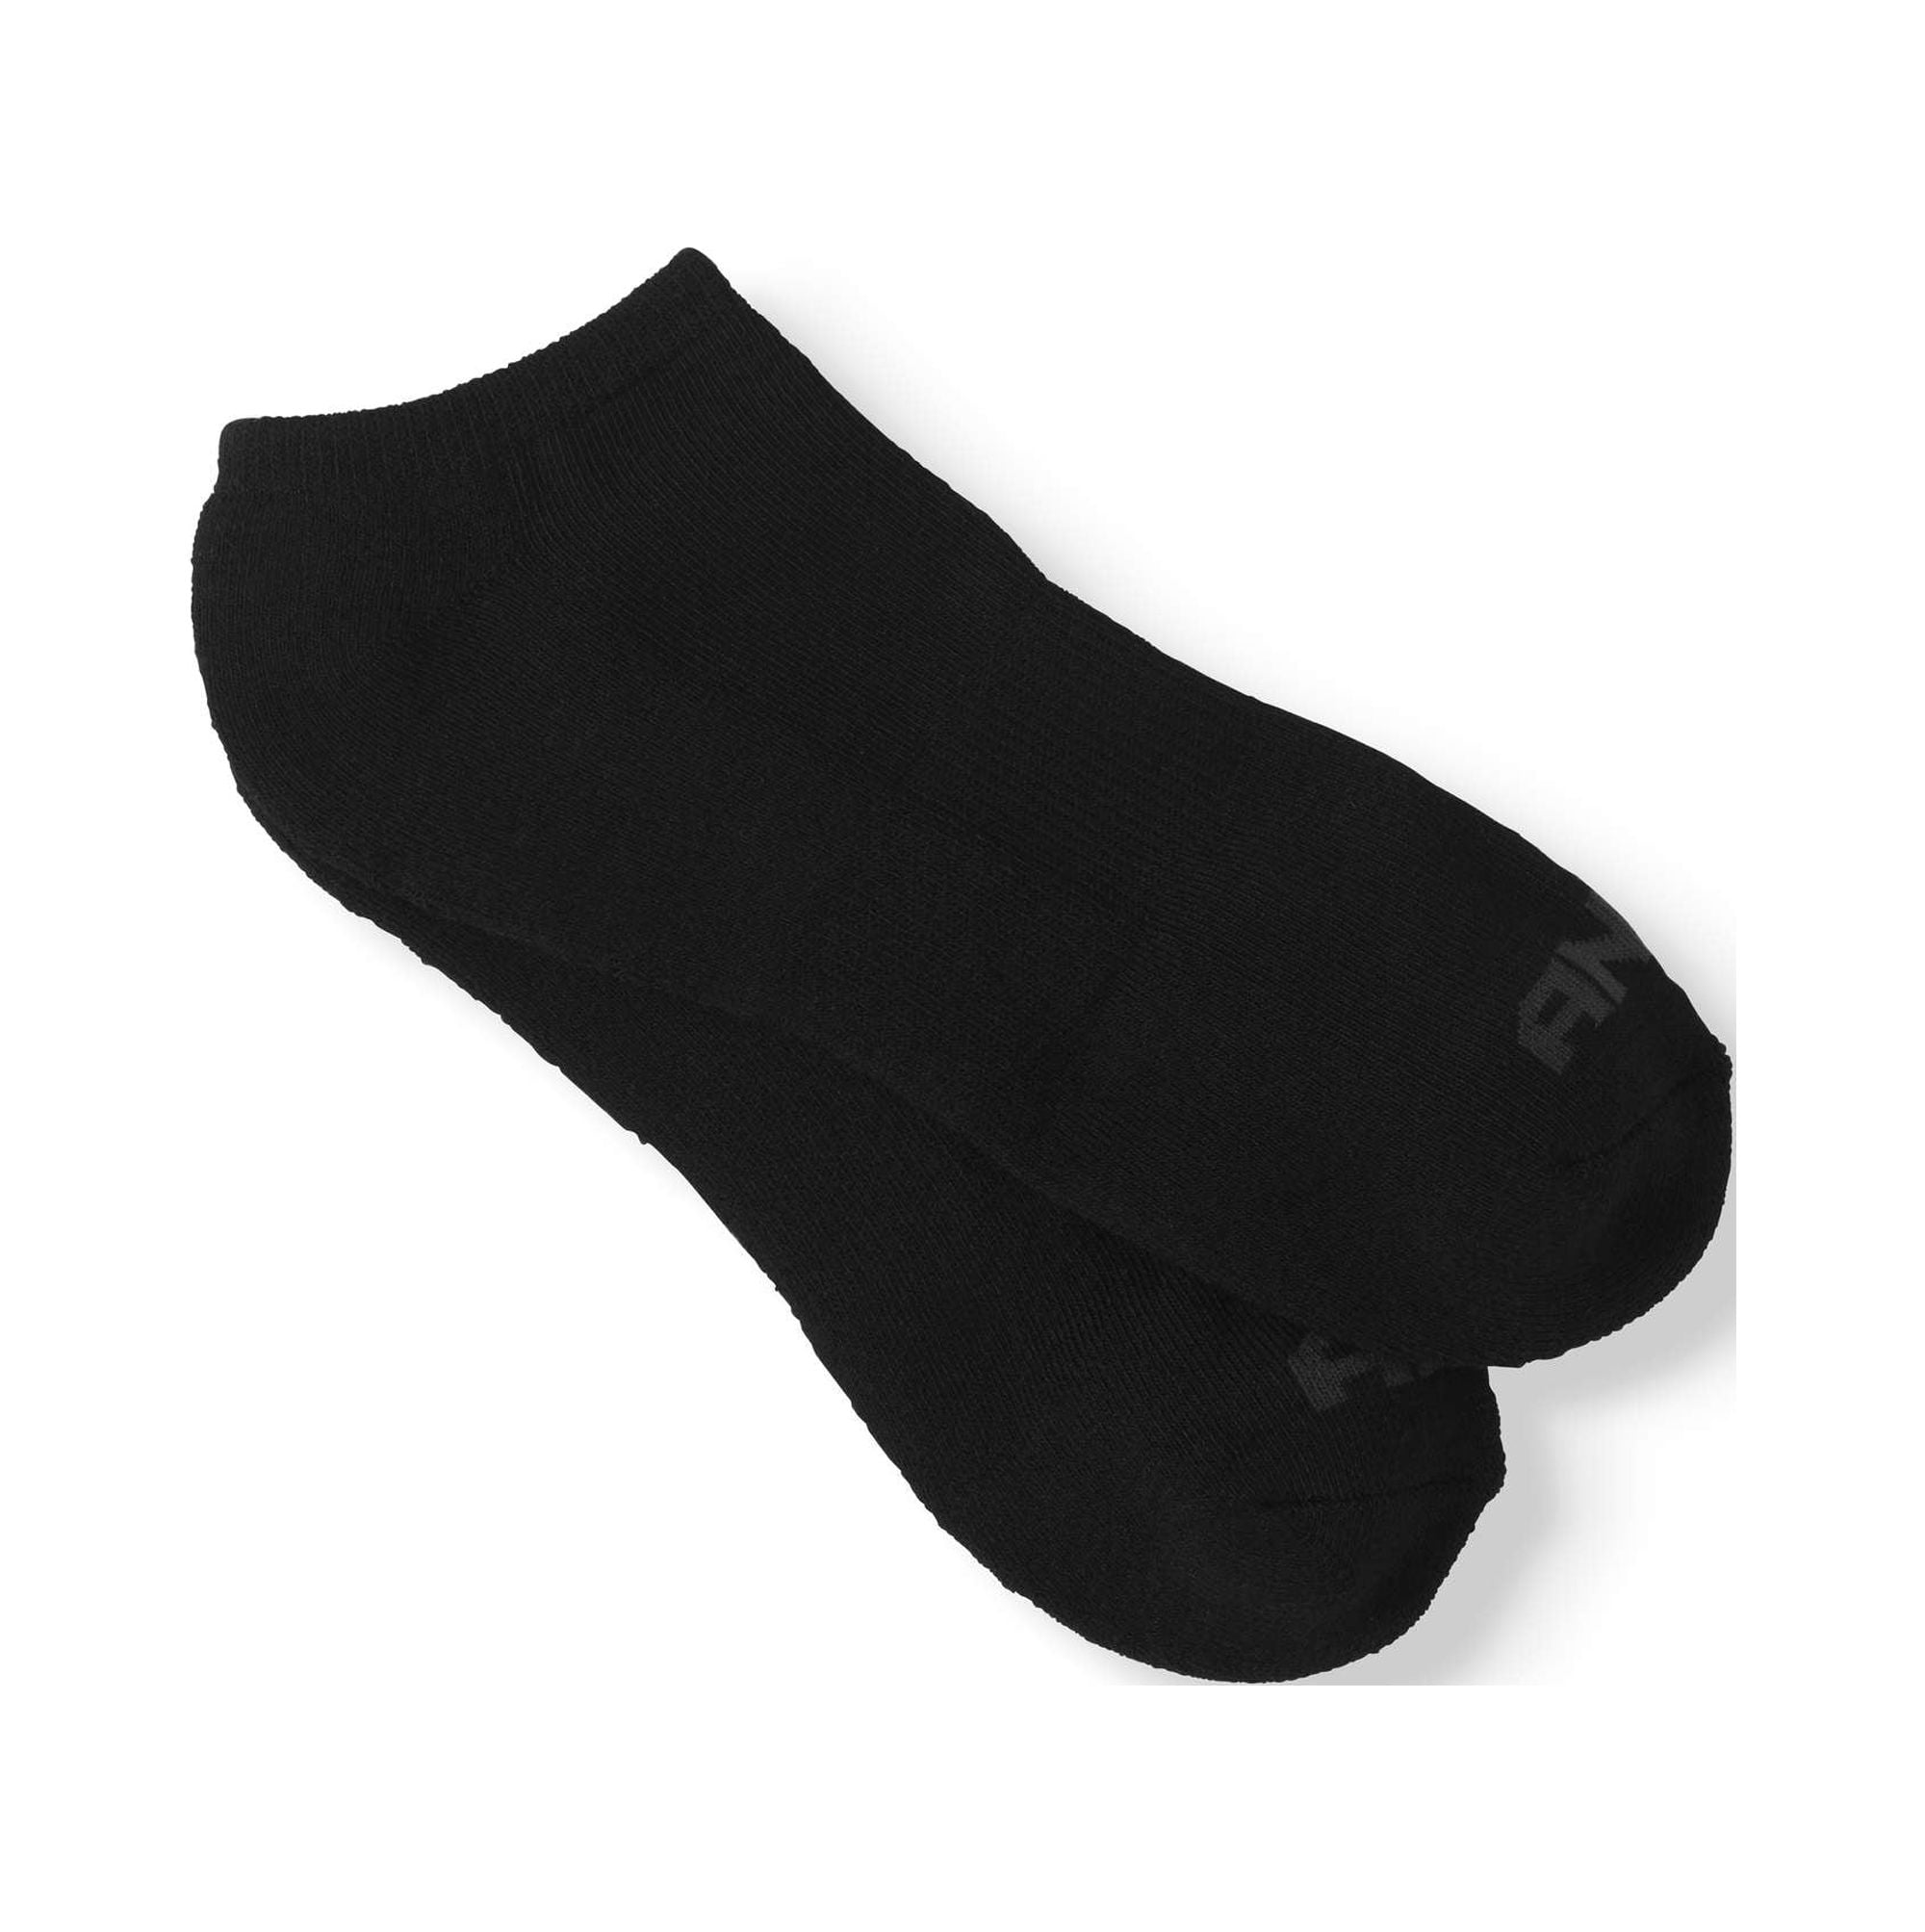 AND1 No Show Men's Socks, 12 Pack - Walmart.com